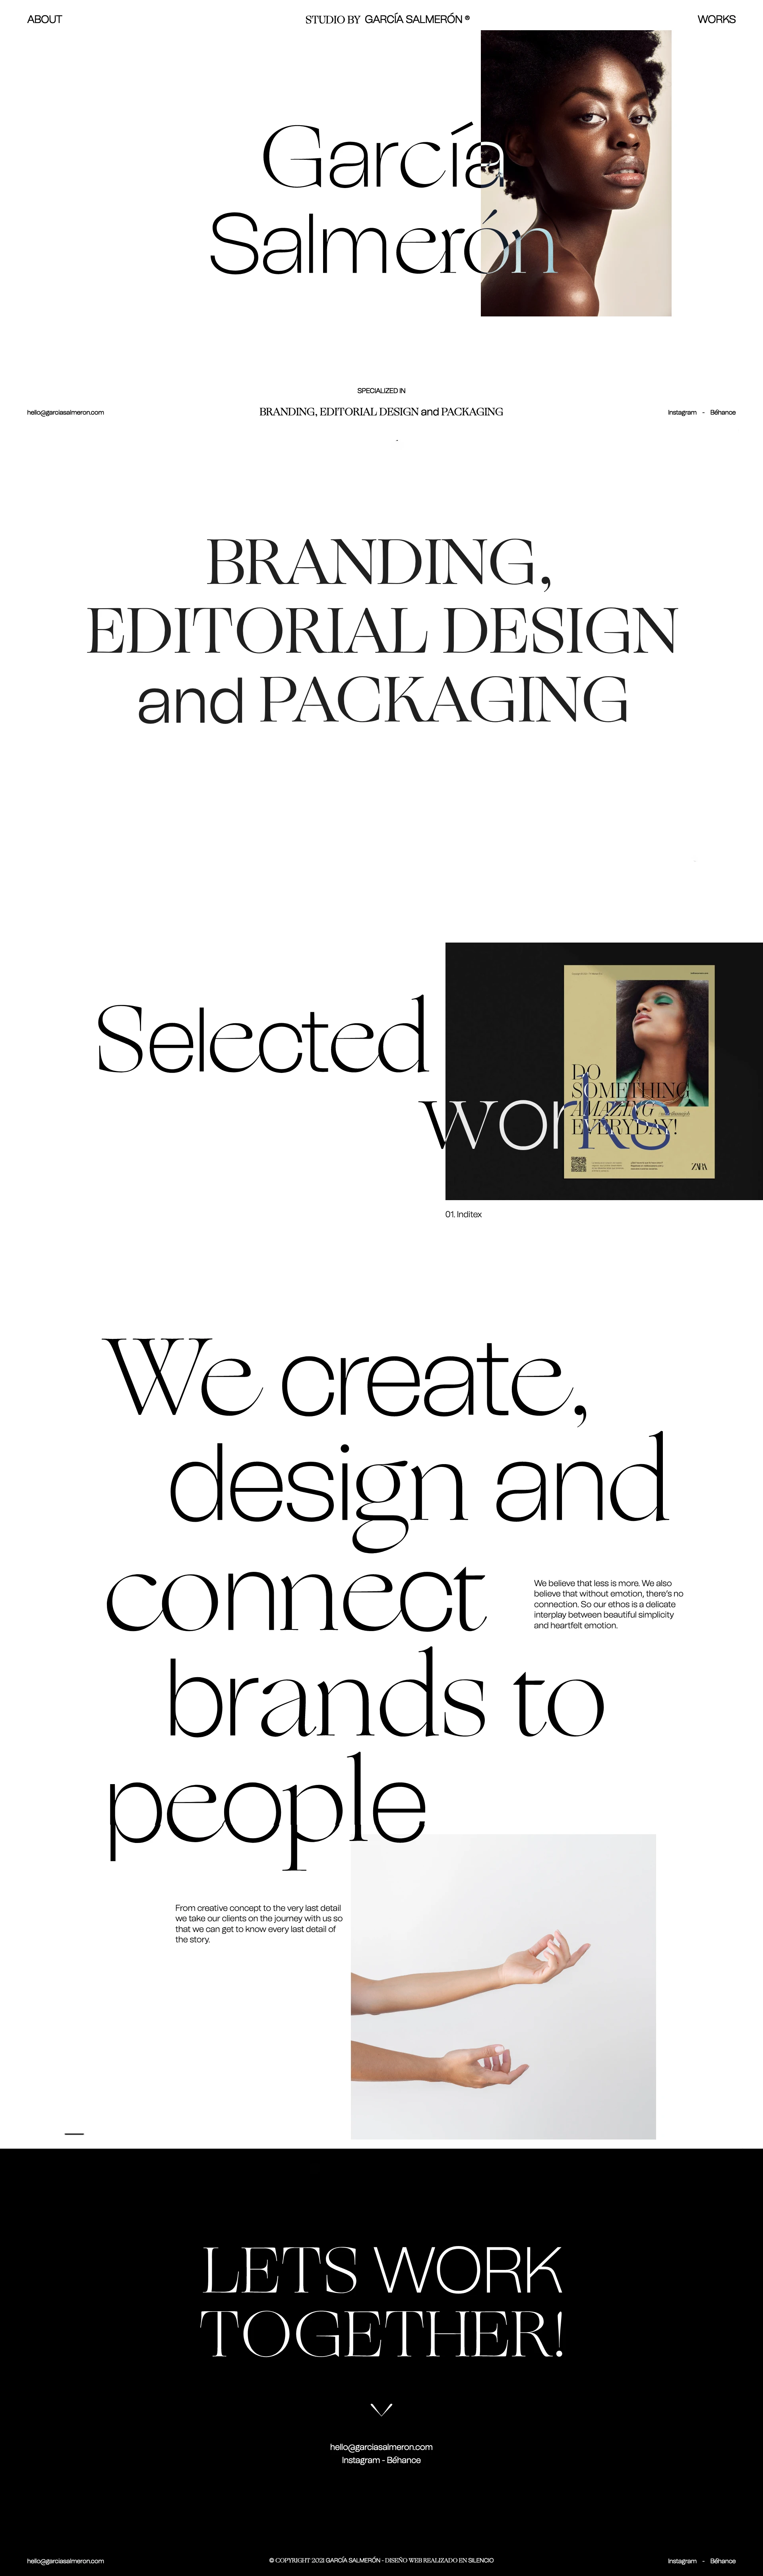 García Salmerón Landing Page Example: Studio specialized in branding, editorial design and packaging